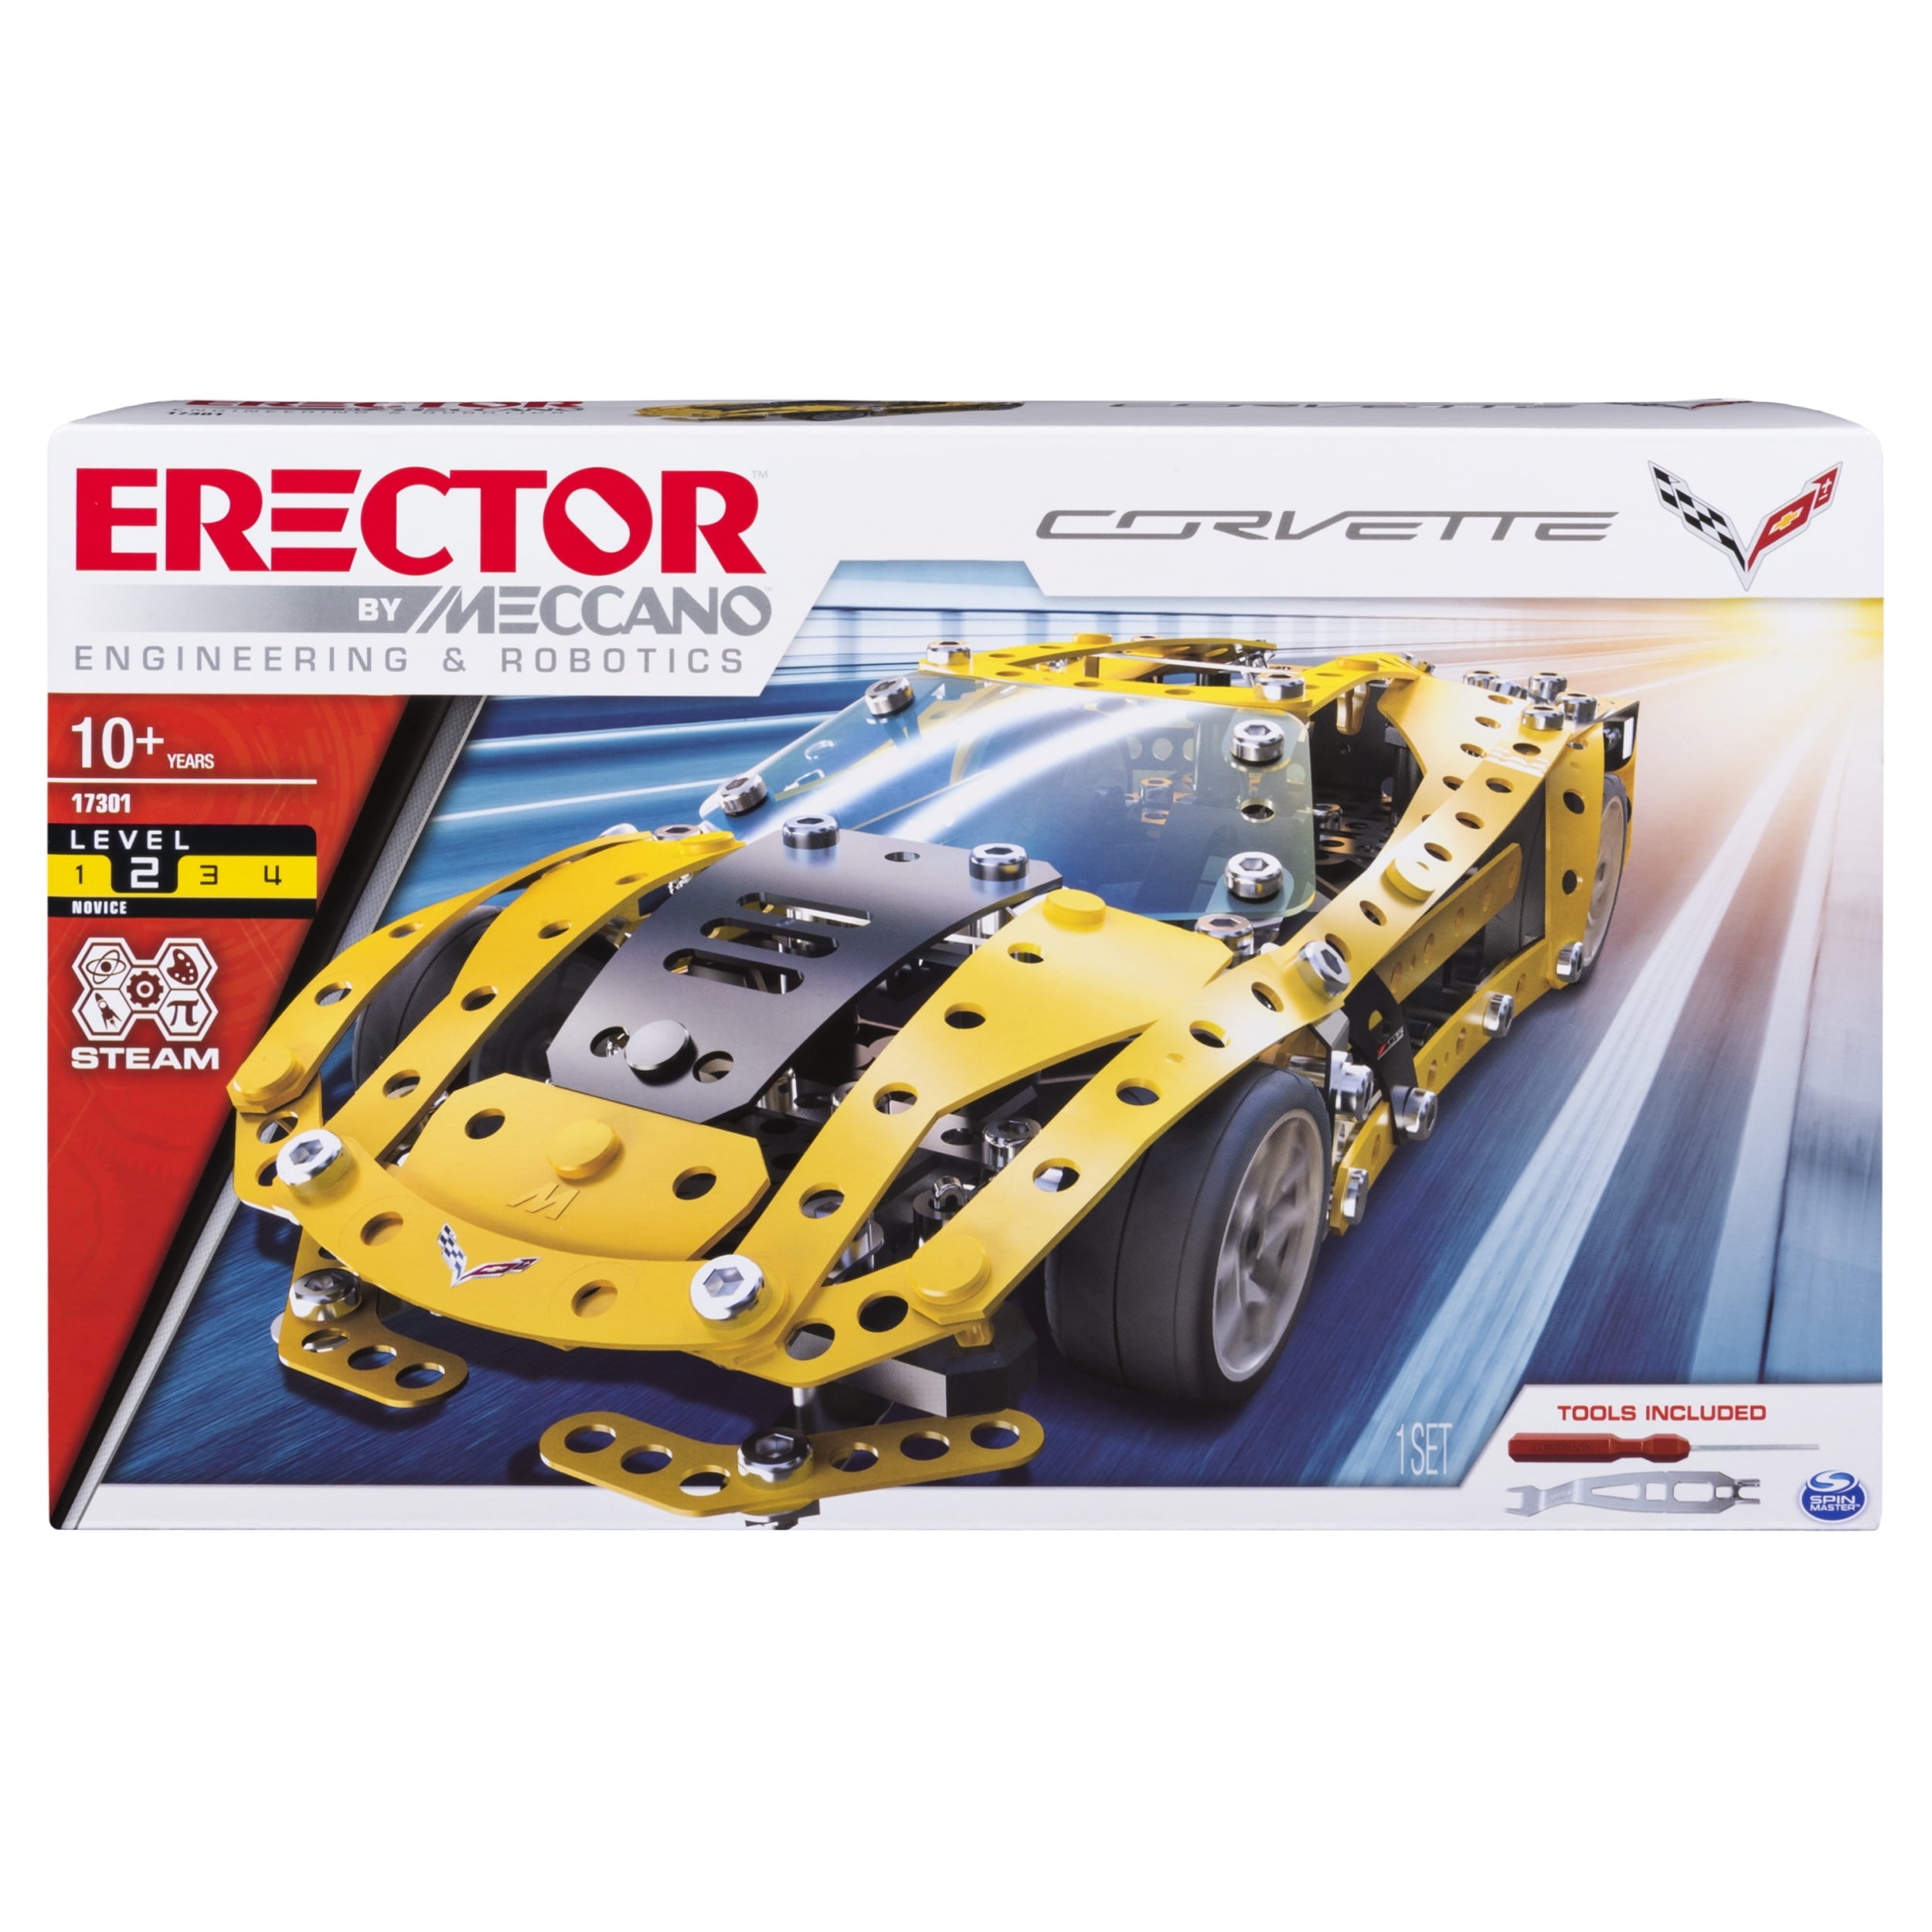 Erector by Meccano, Chevrolet Corvette Model STEM Building Kit